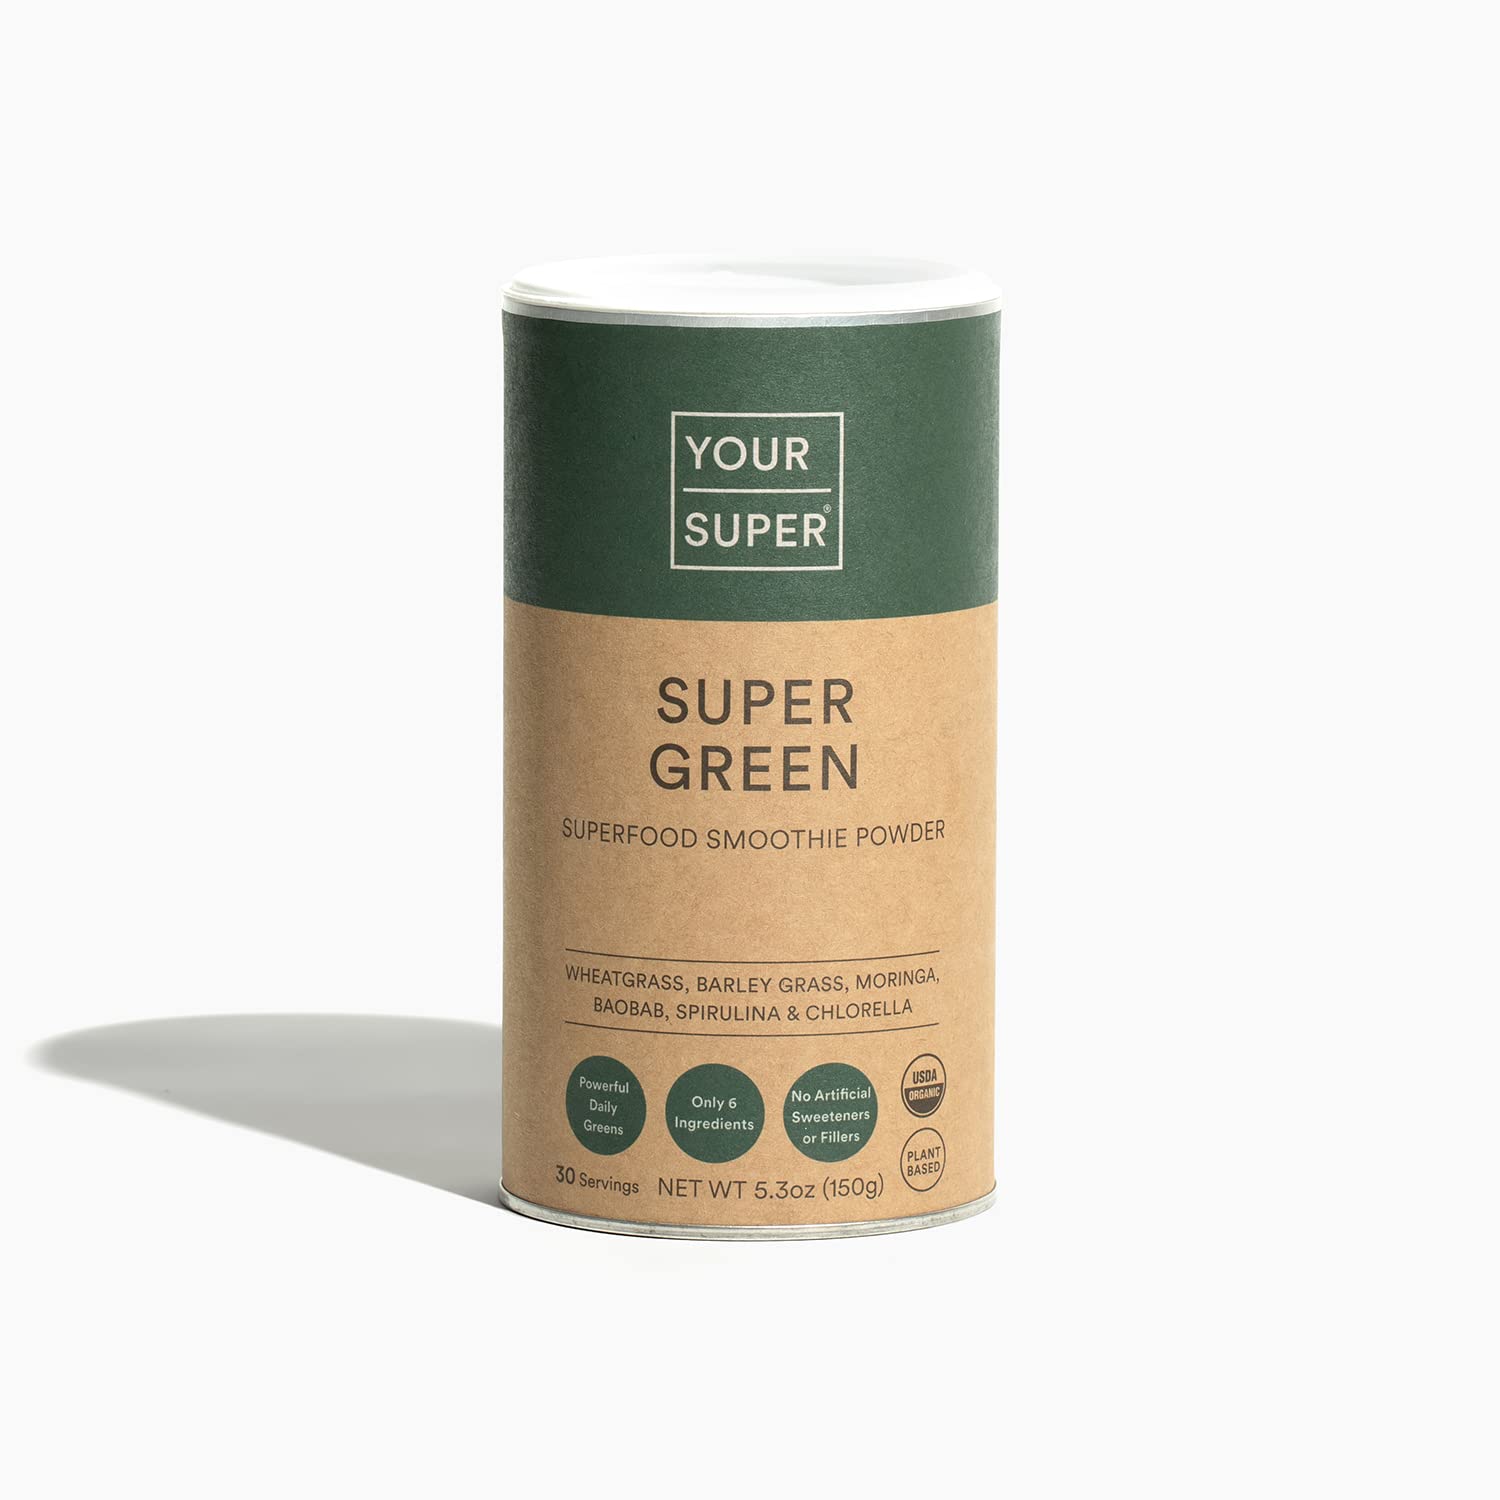 Your Super Organic Super Green Smoothie Mix – Superfood Powder for Natural Immune Support, Made with Wheatgrass, Barley Grass, Moringa, Spirulina, Chlorella Baobab Powder (30 Servings)